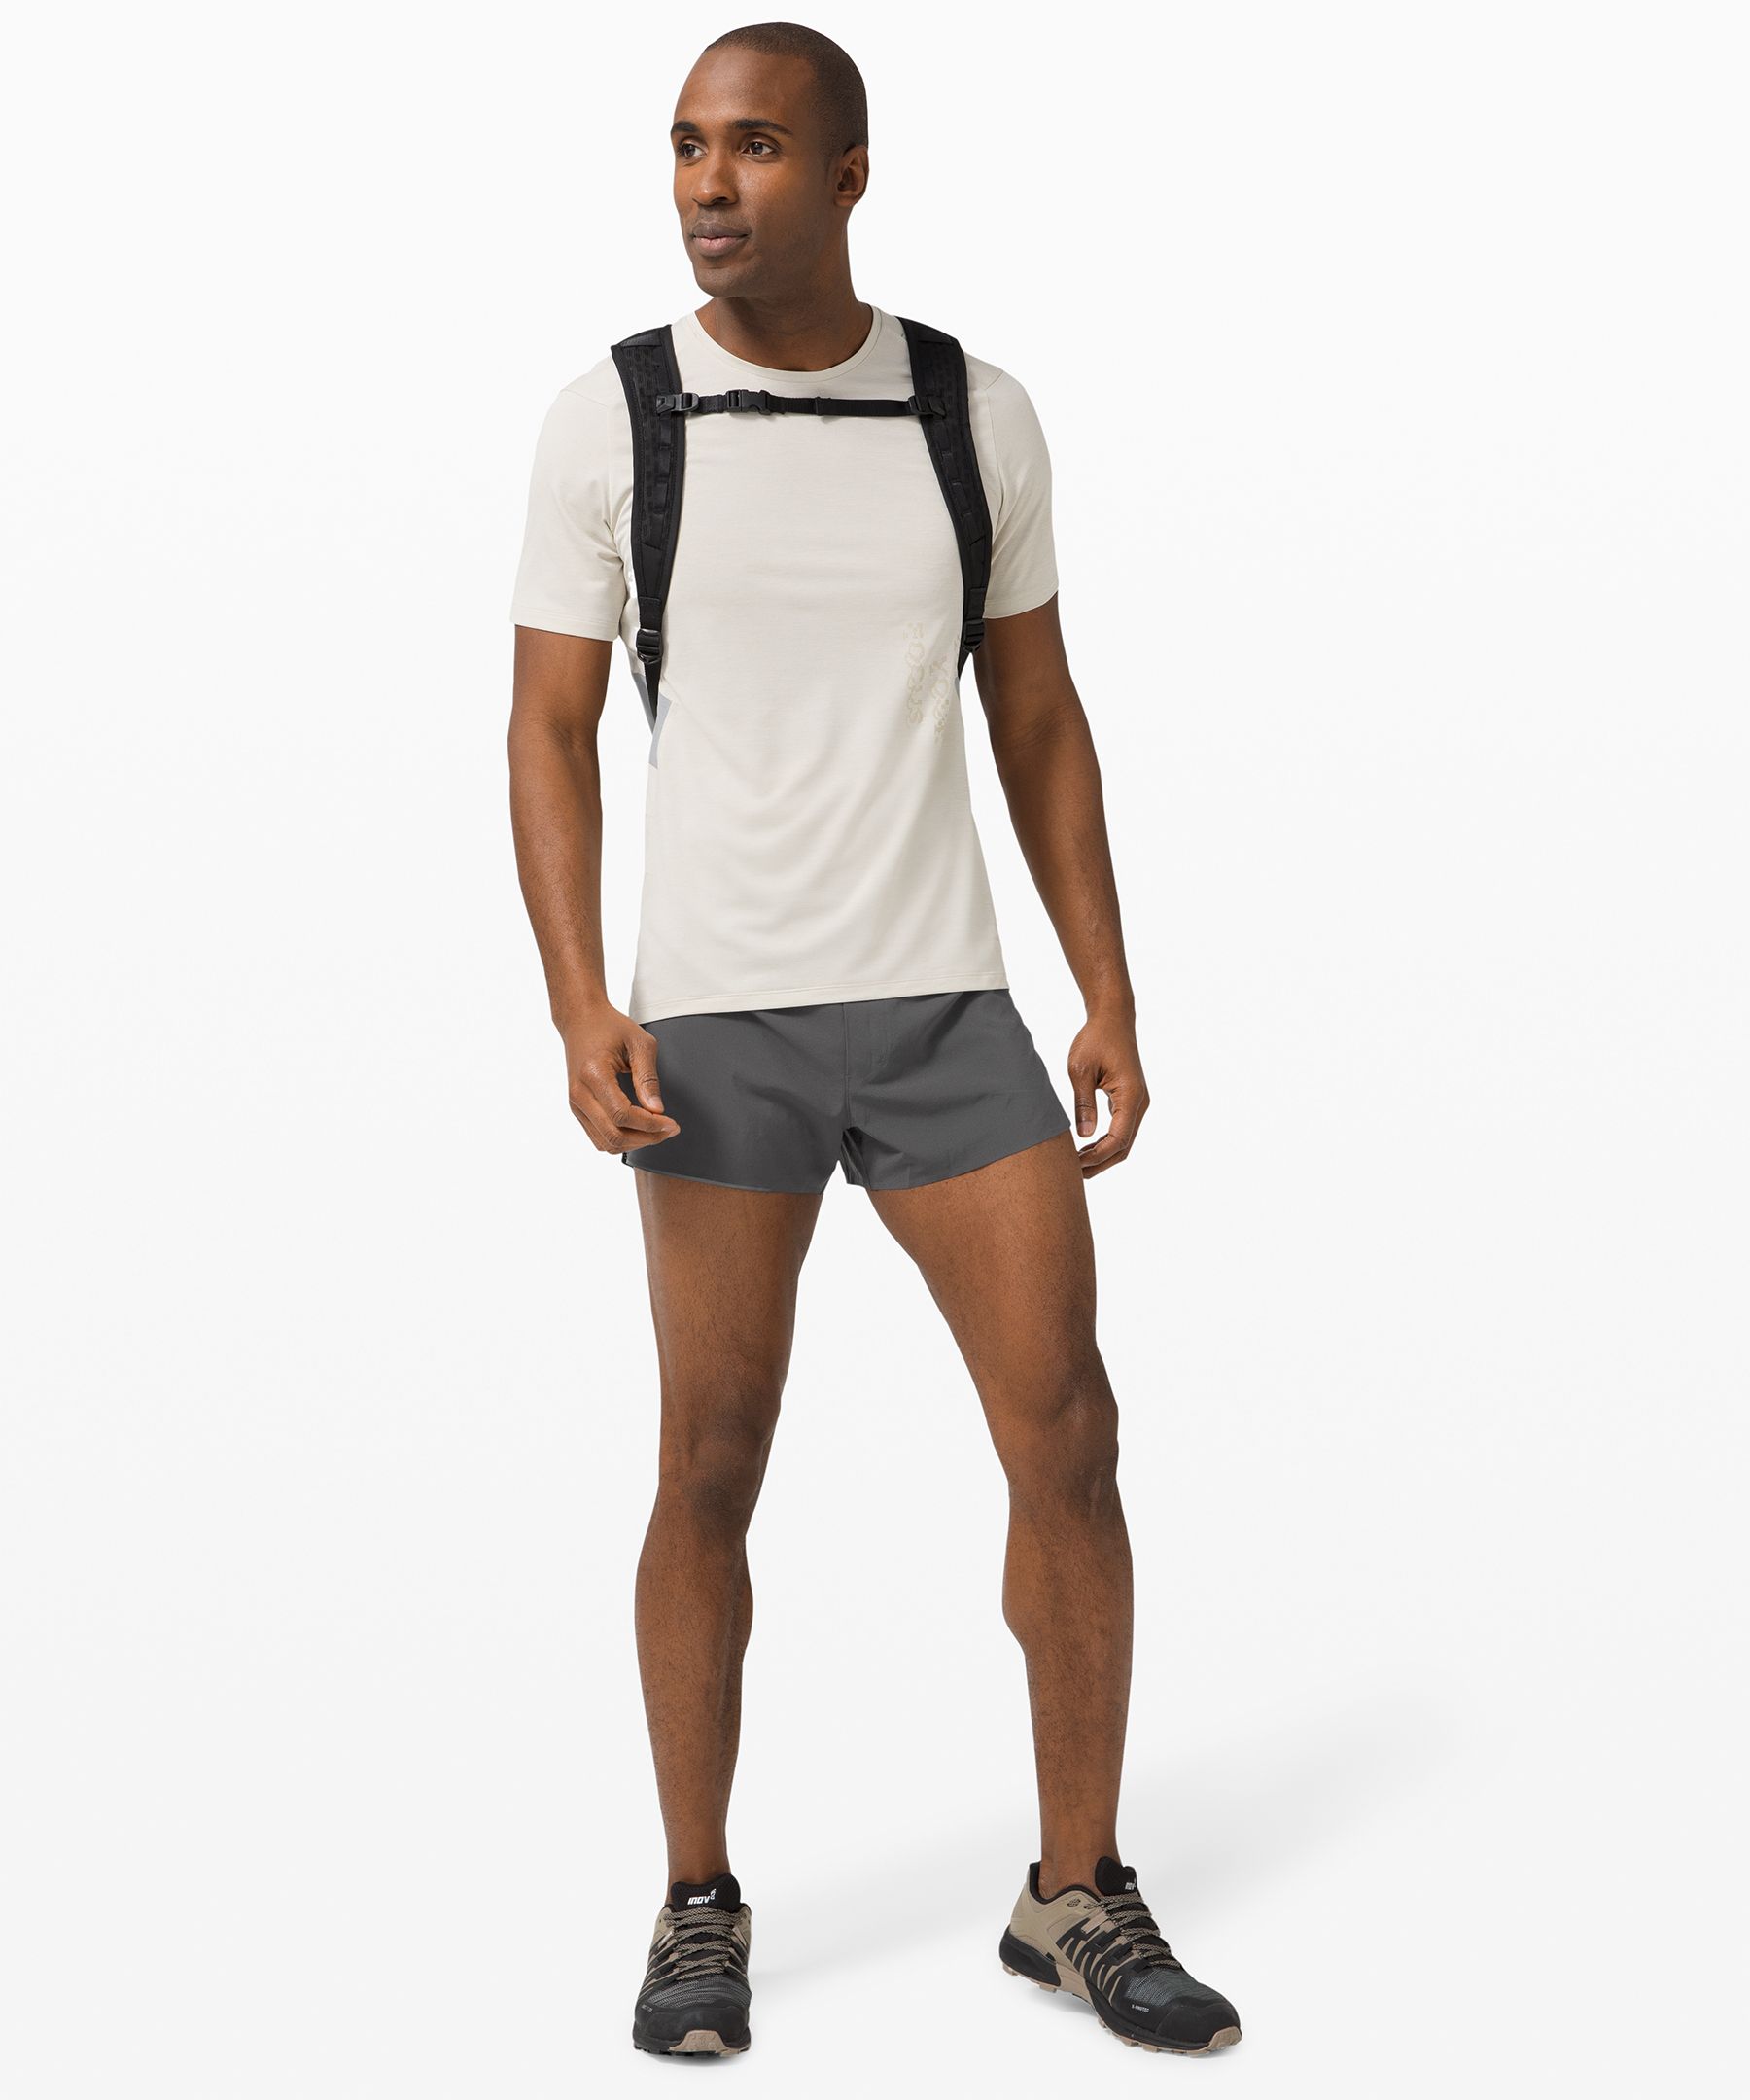 mens lululemon shorts sale